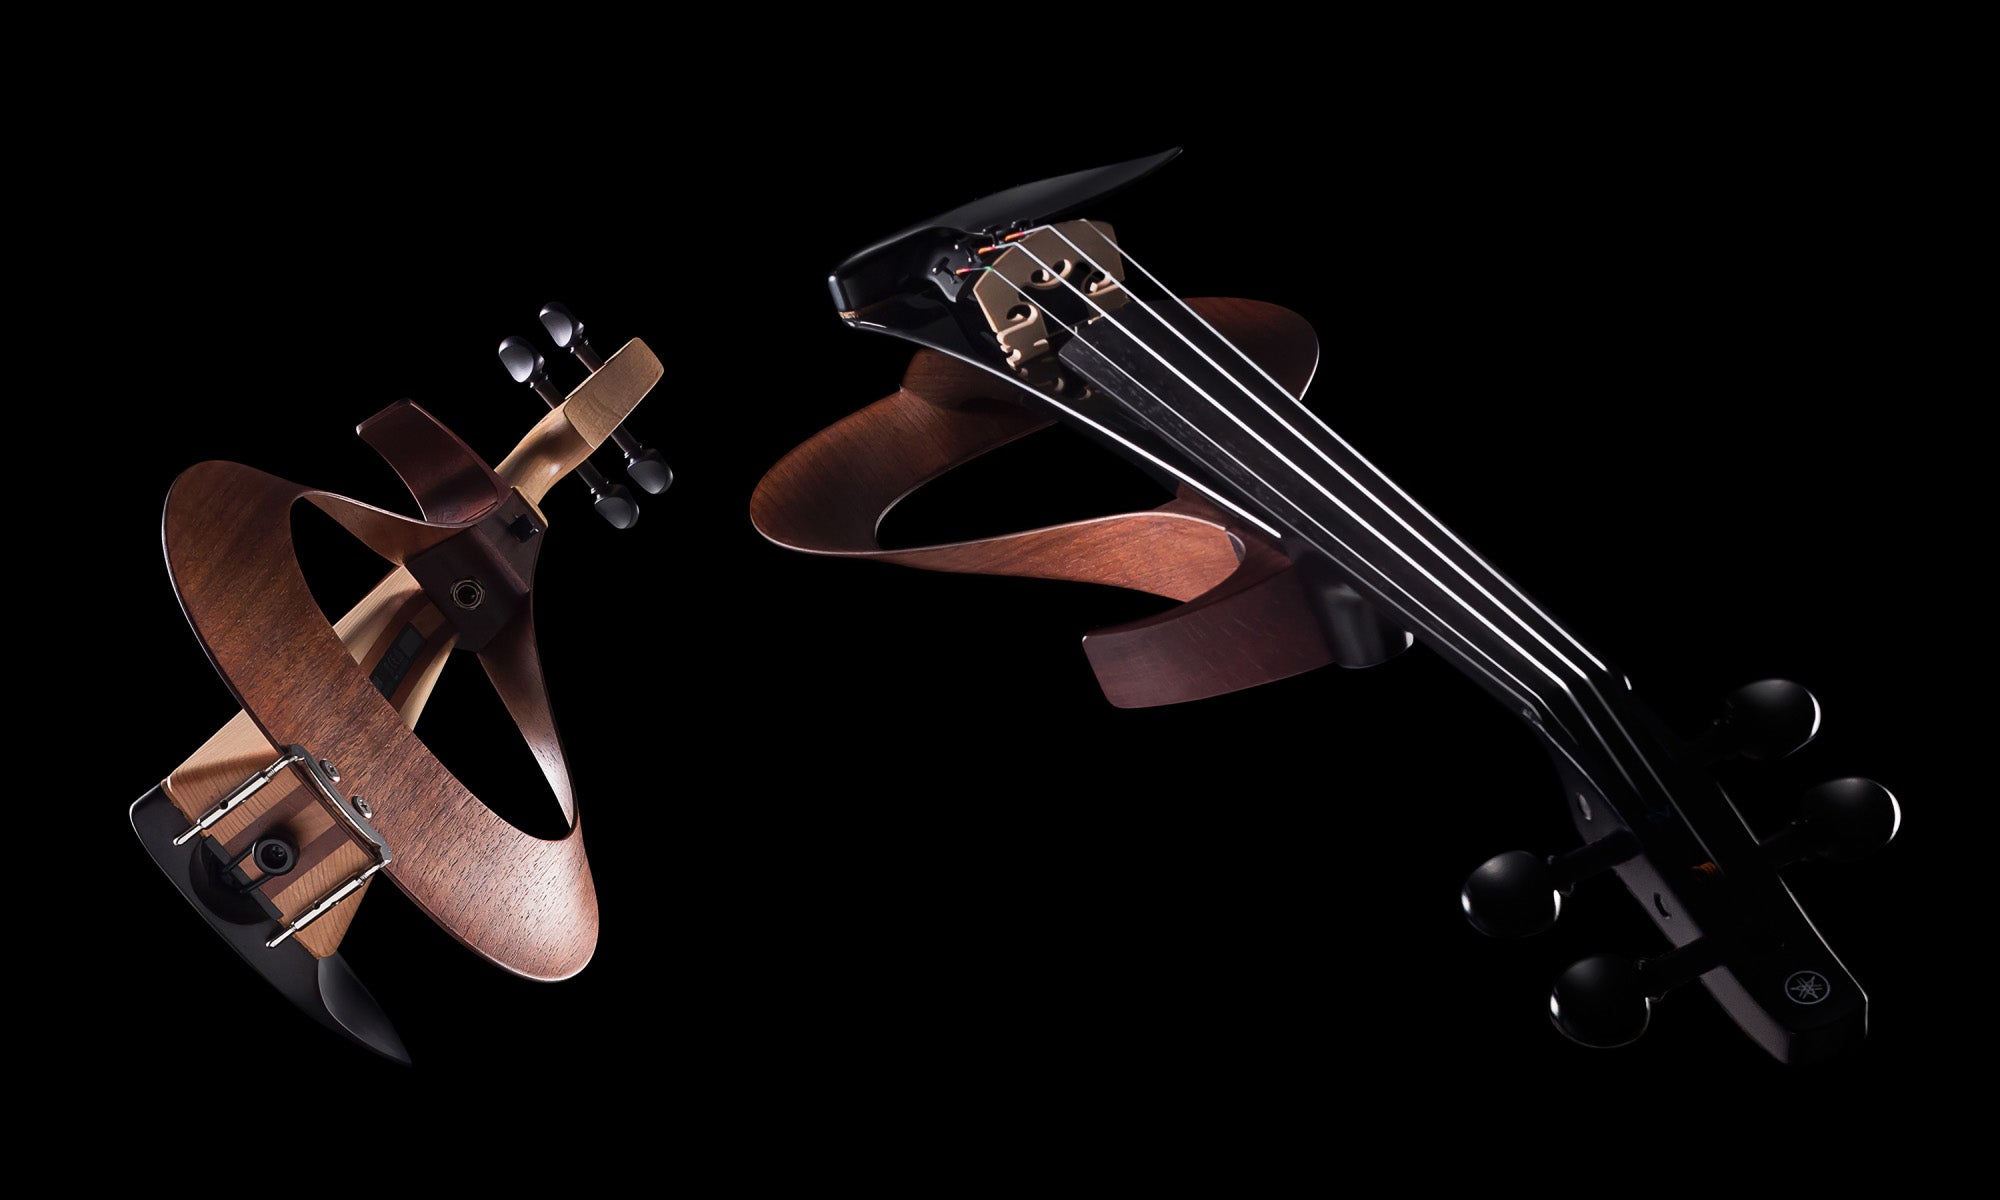 Stringers Music | Violins, Violas, Cellos, Bows, Strings, Cases & More